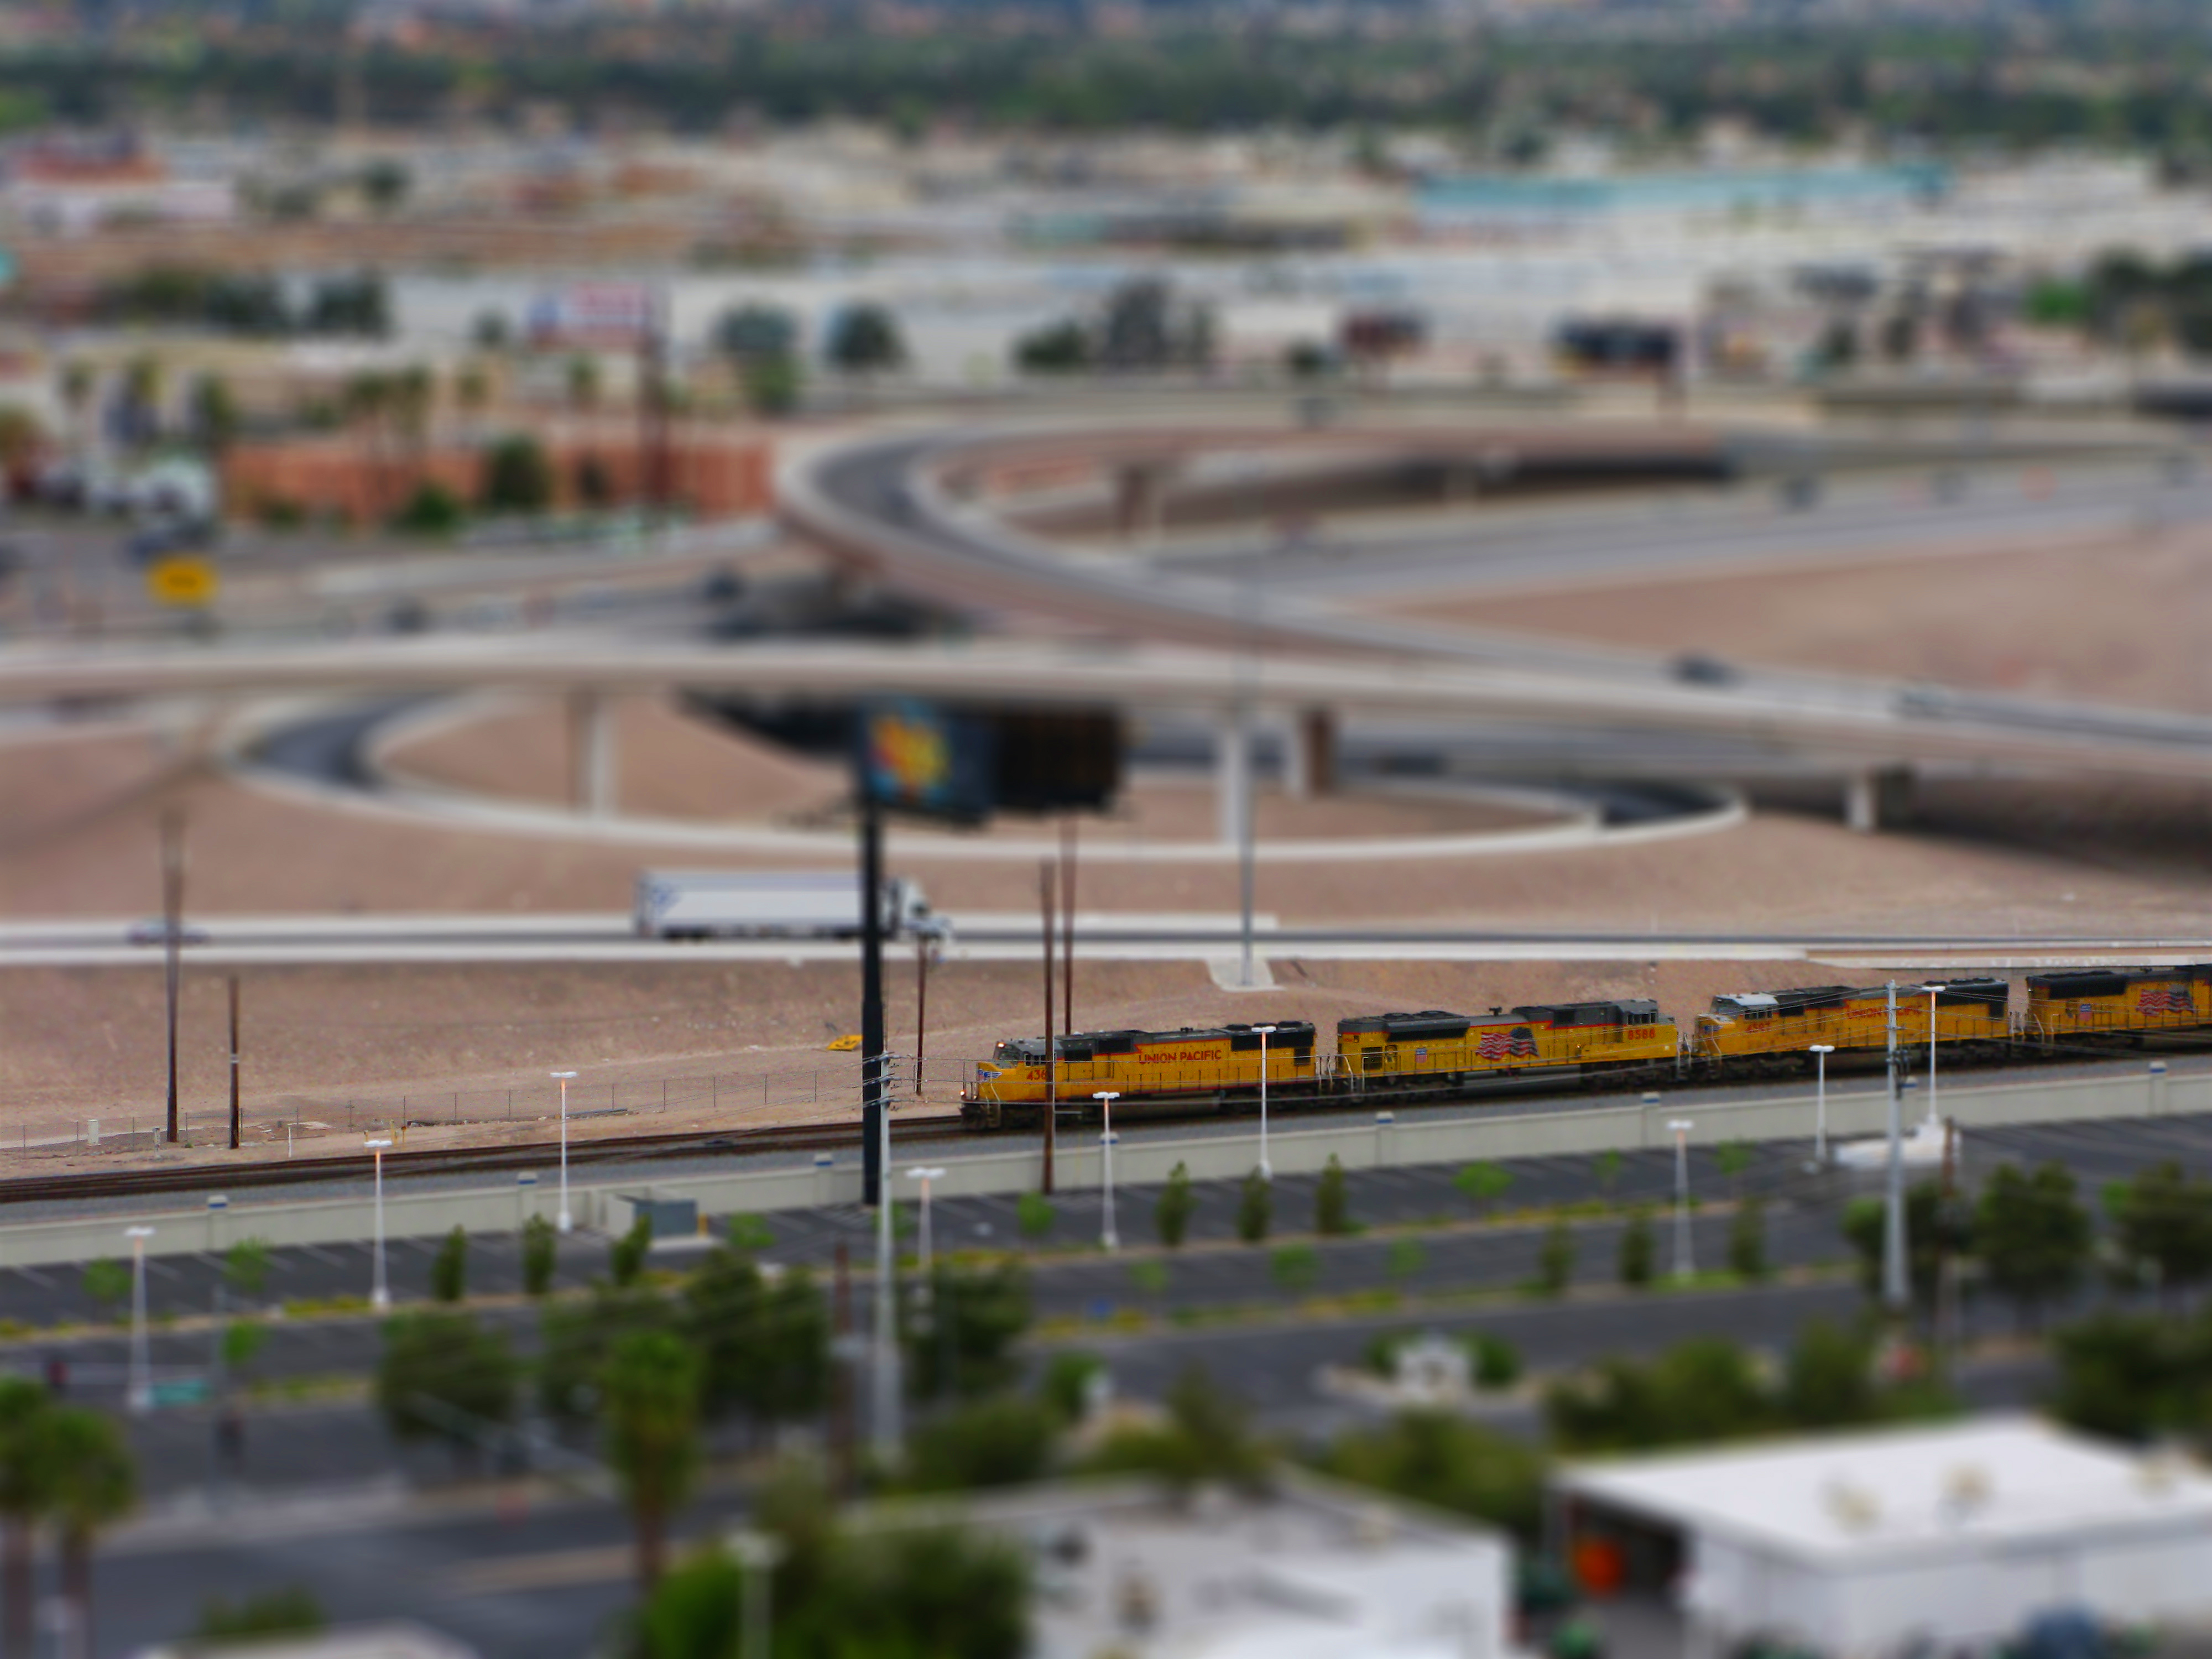 trains, railroad tracks, tilt-shift, vehicles - desktop wallpaper